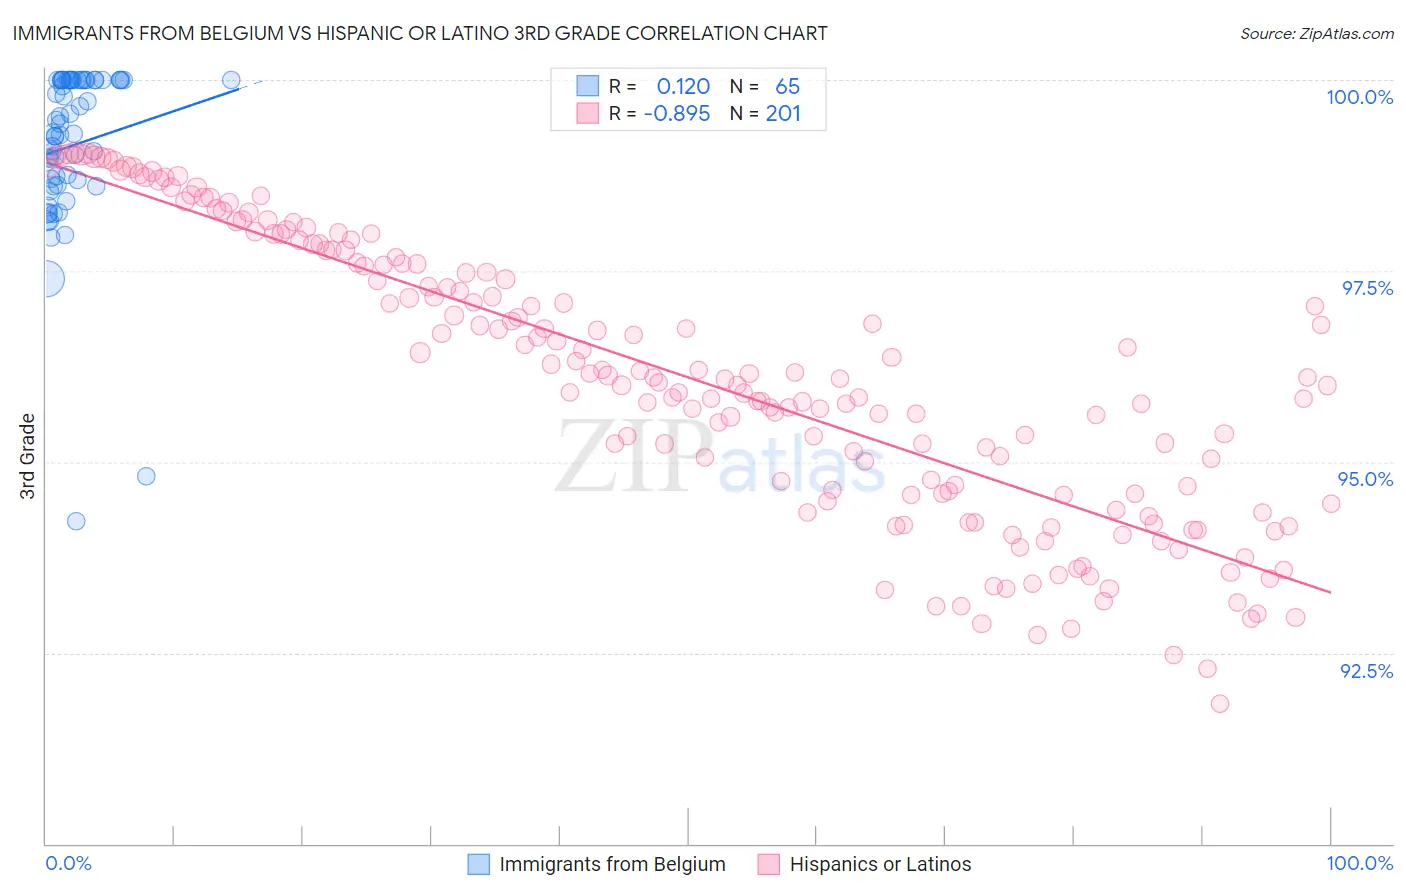 Immigrants from Belgium vs Hispanic or Latino 3rd Grade